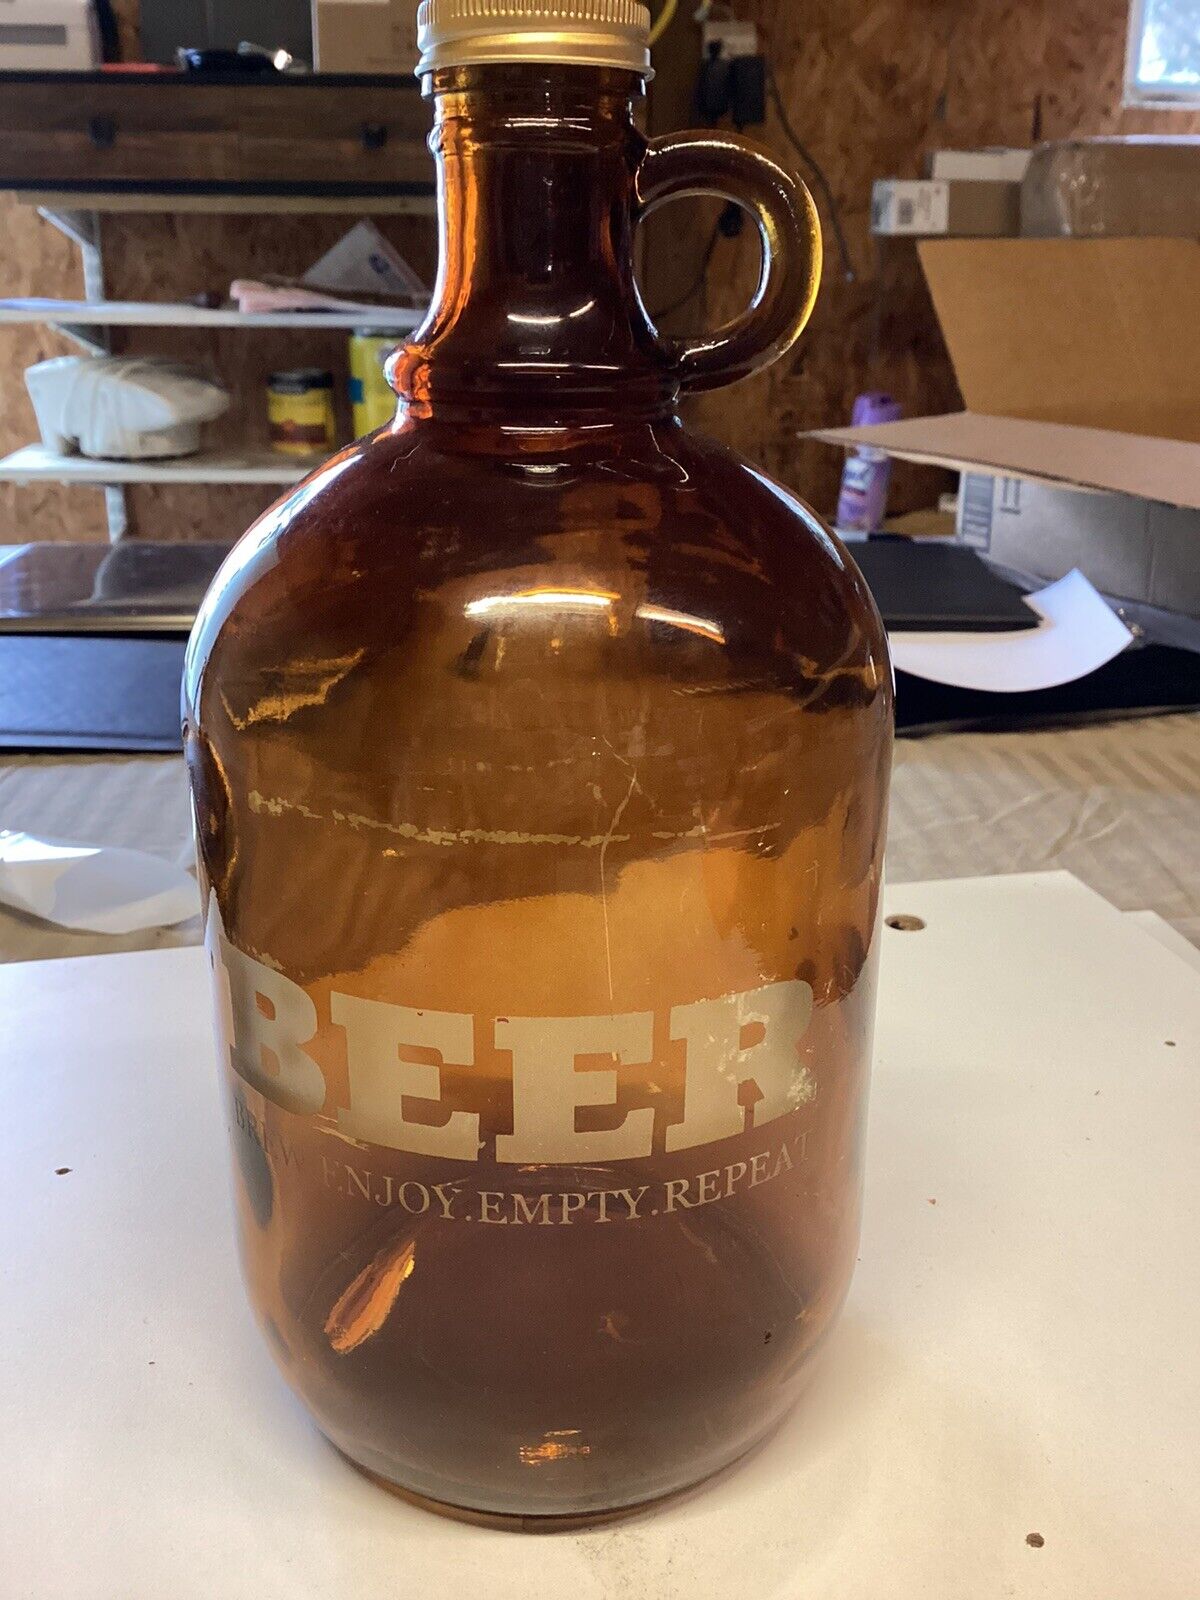 1/2 gallon beer Bottle - brew enjoy empty repeat